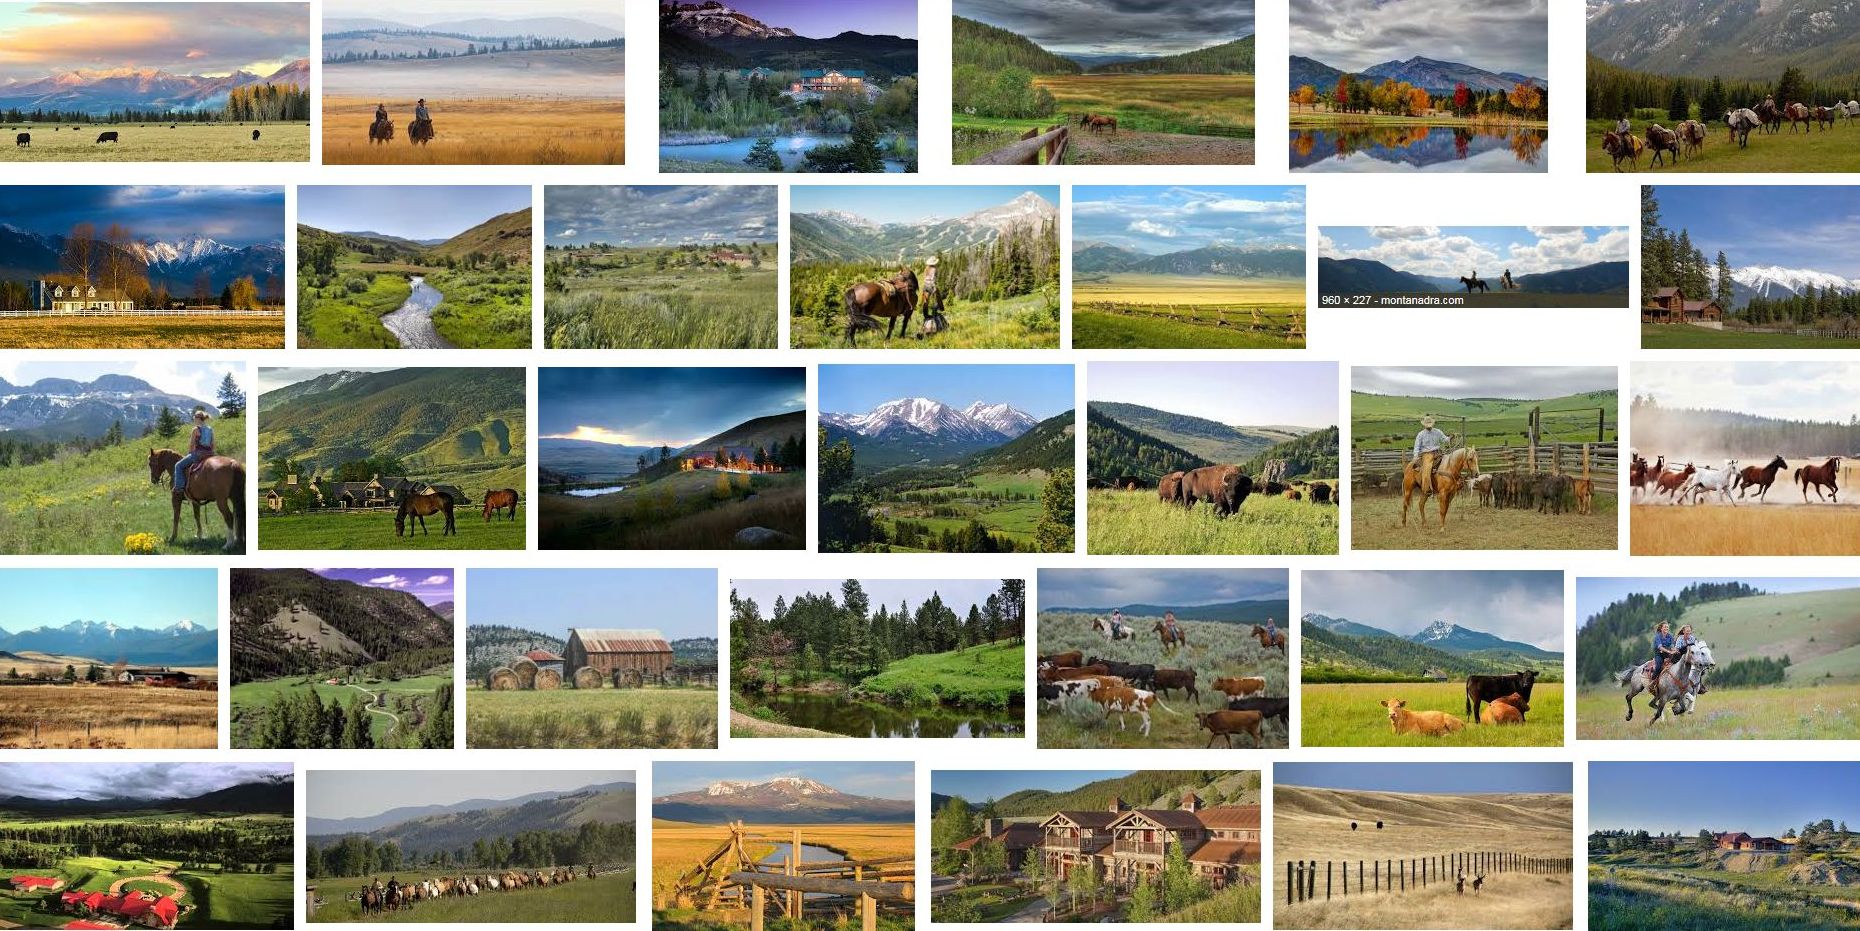 Montana Ranch Listings $400,000 To $500,000